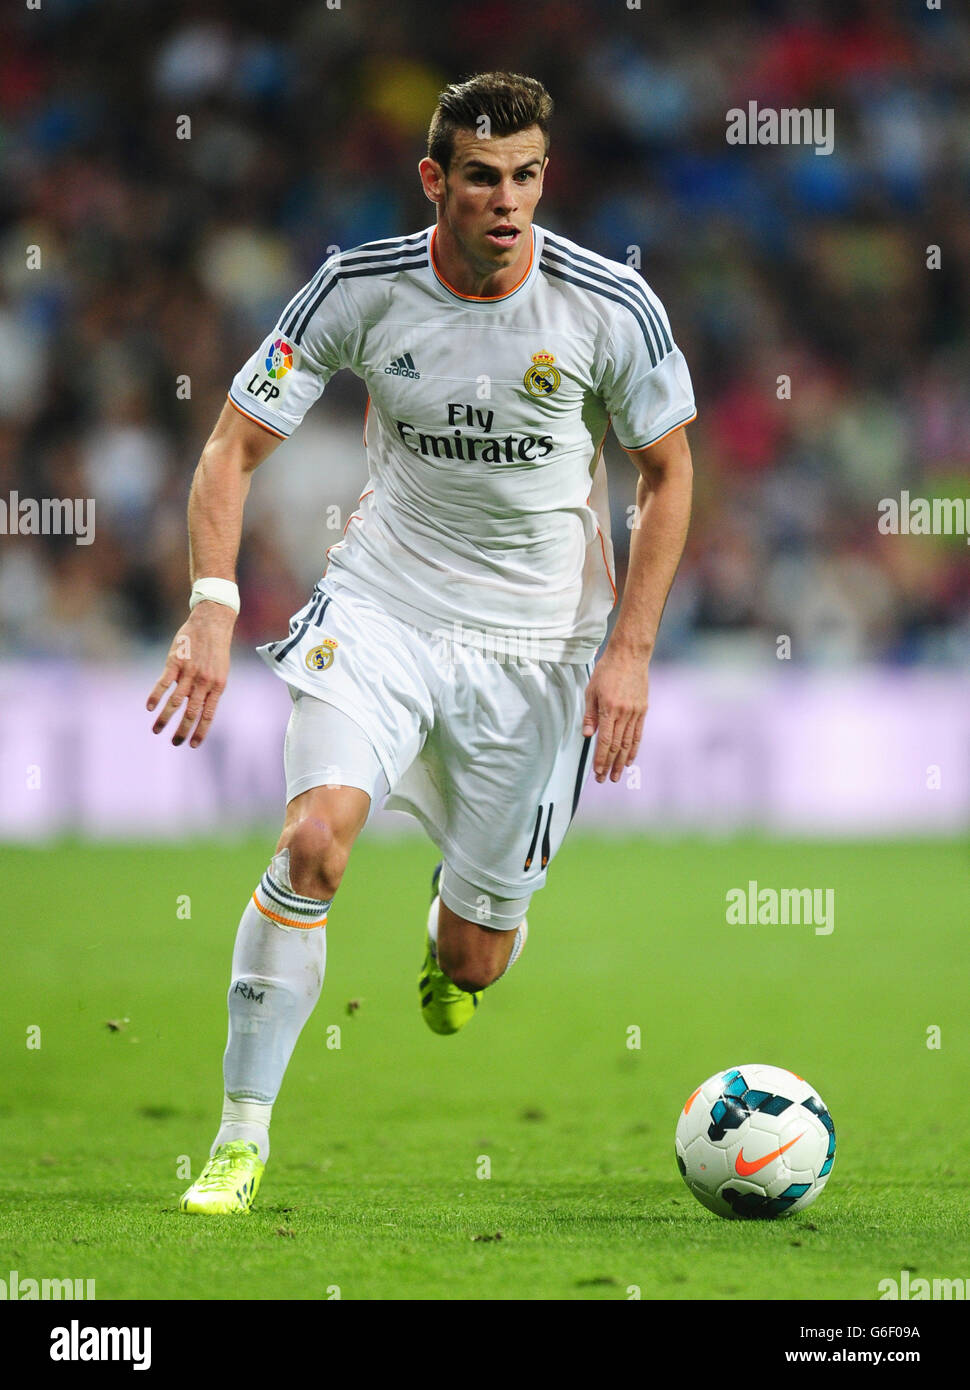 Real Madrid's Gareth Bale during the La Liga match at Santiago Bernabeu, Madrid, Spain. Stock Photo